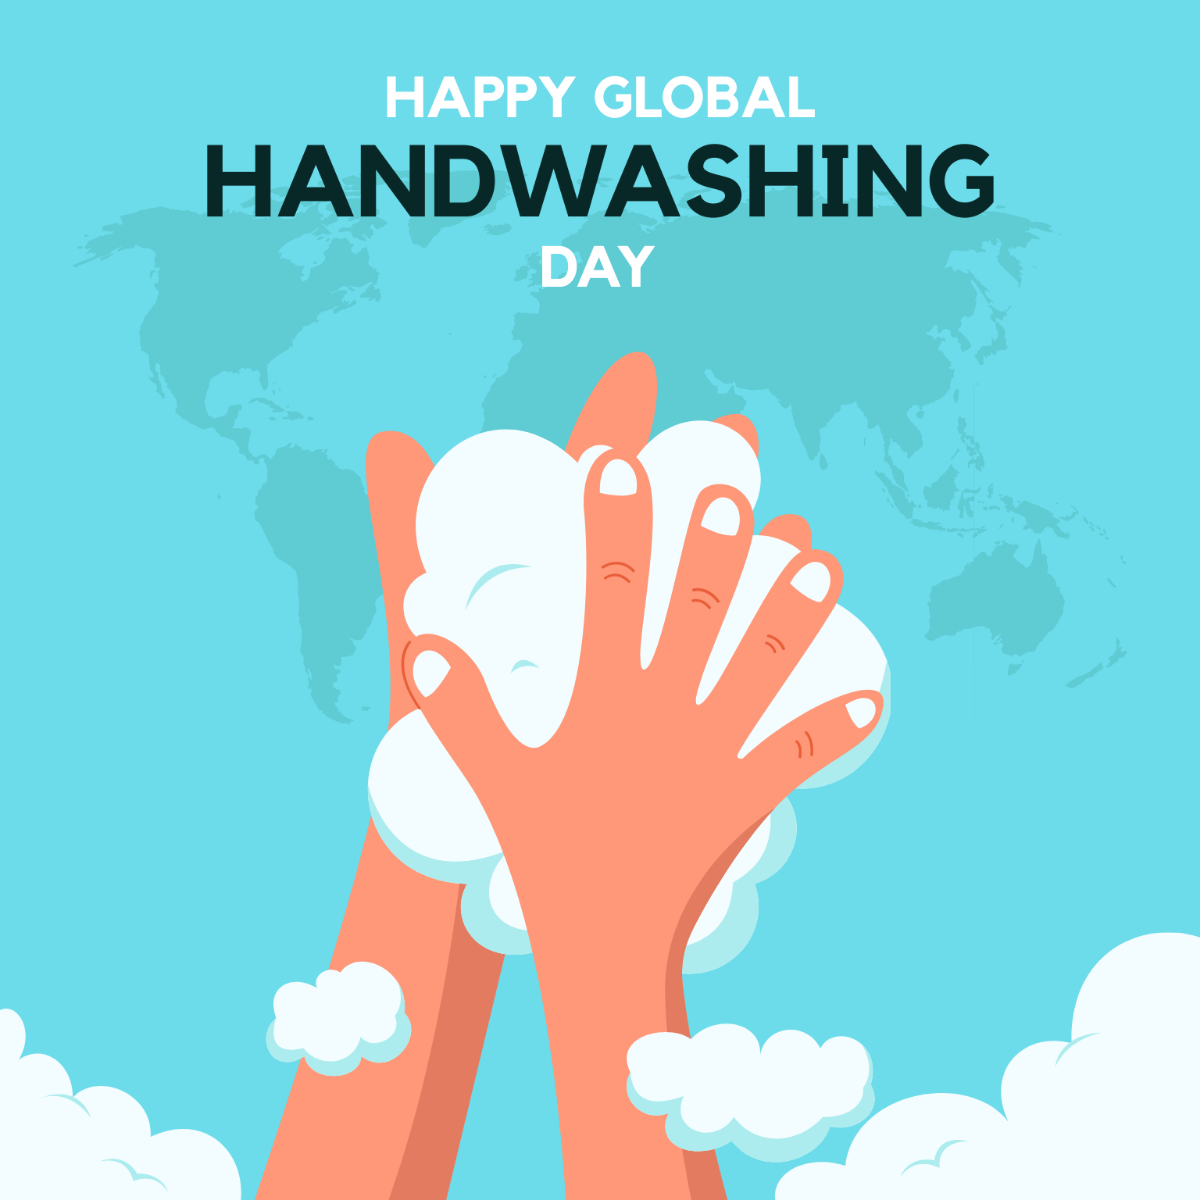 Free Happy Global Handwashing Day Illustration Template